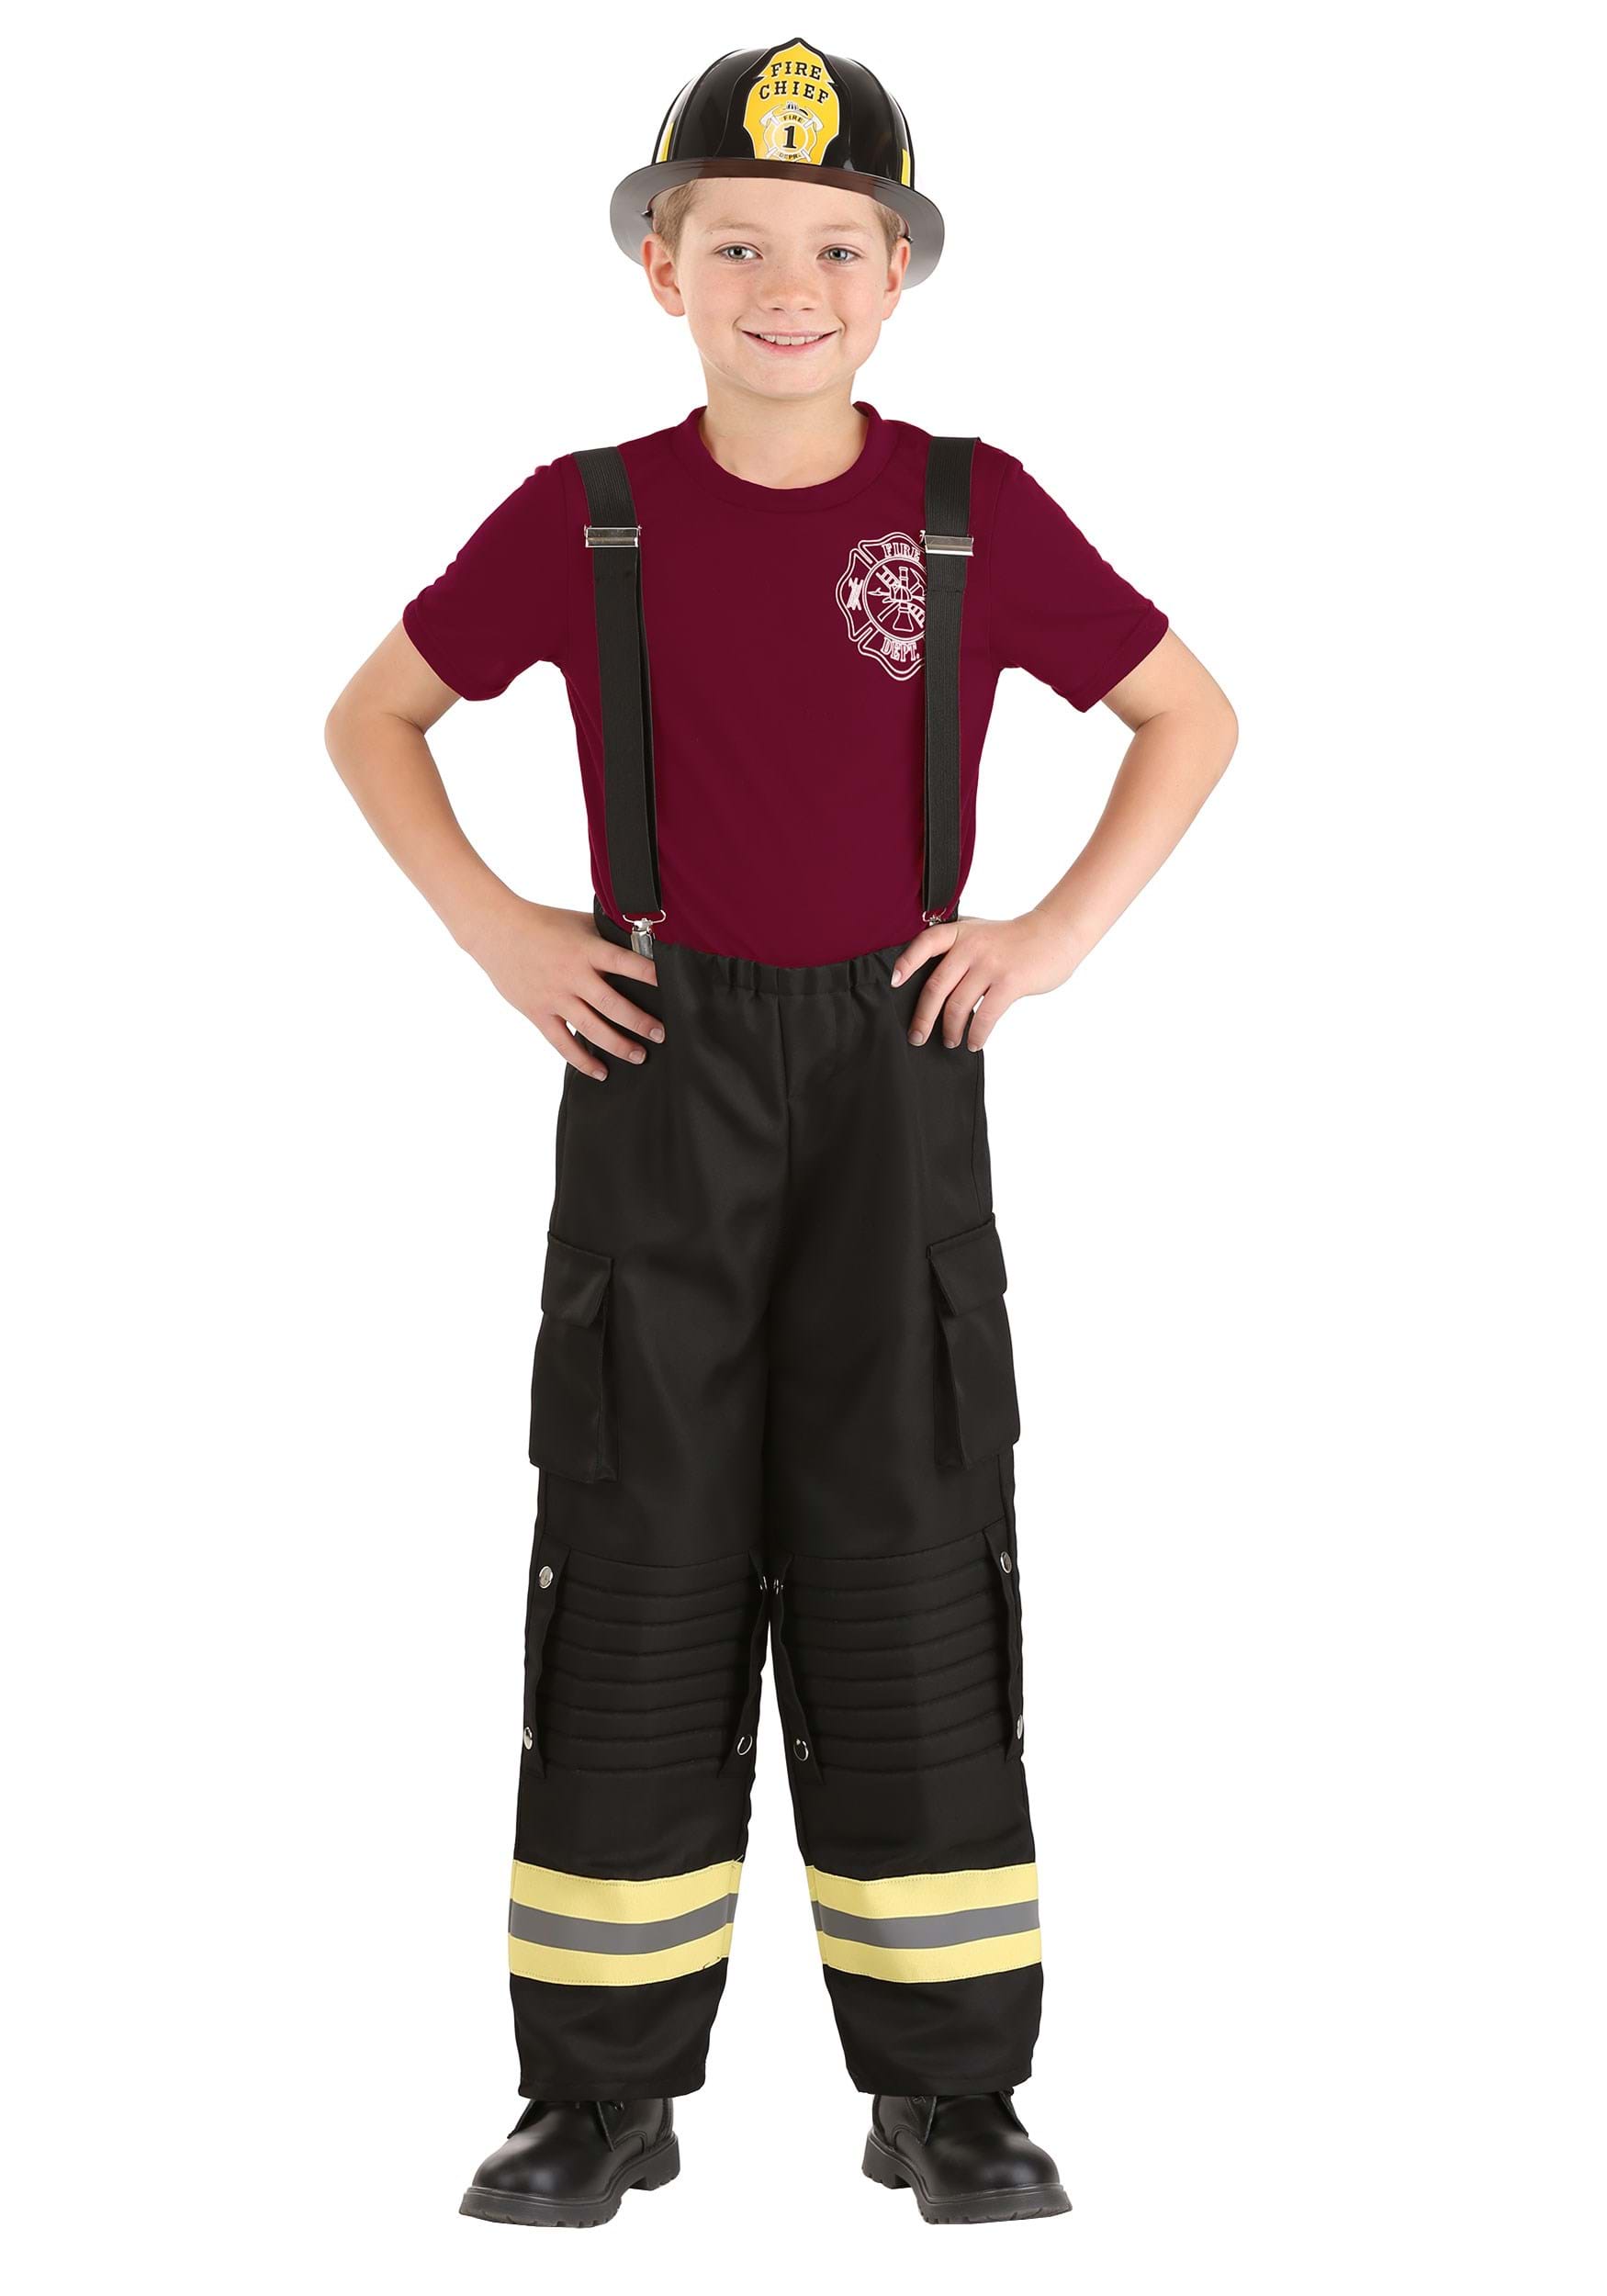 Fire Captain Costume for Kids